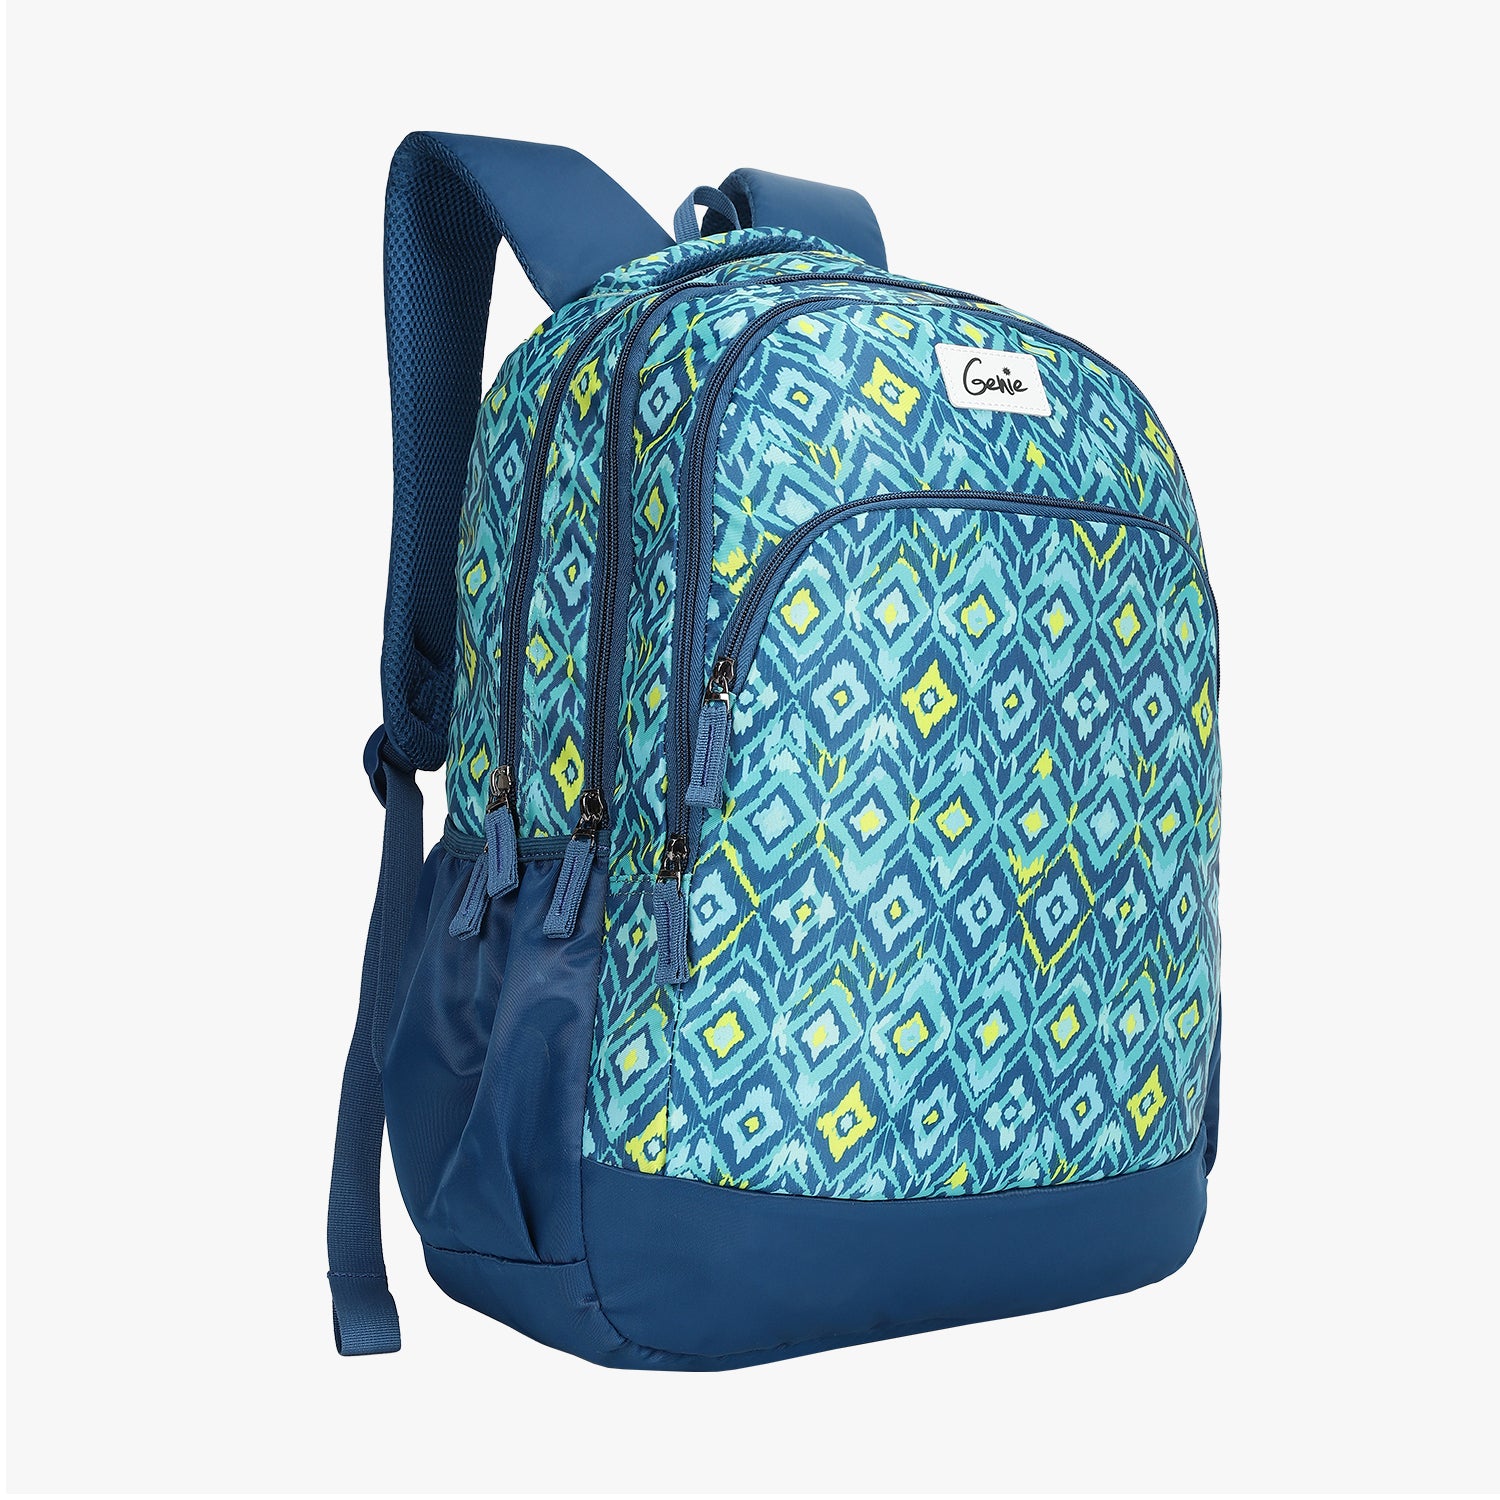 Ikattish School Backpack - Teal